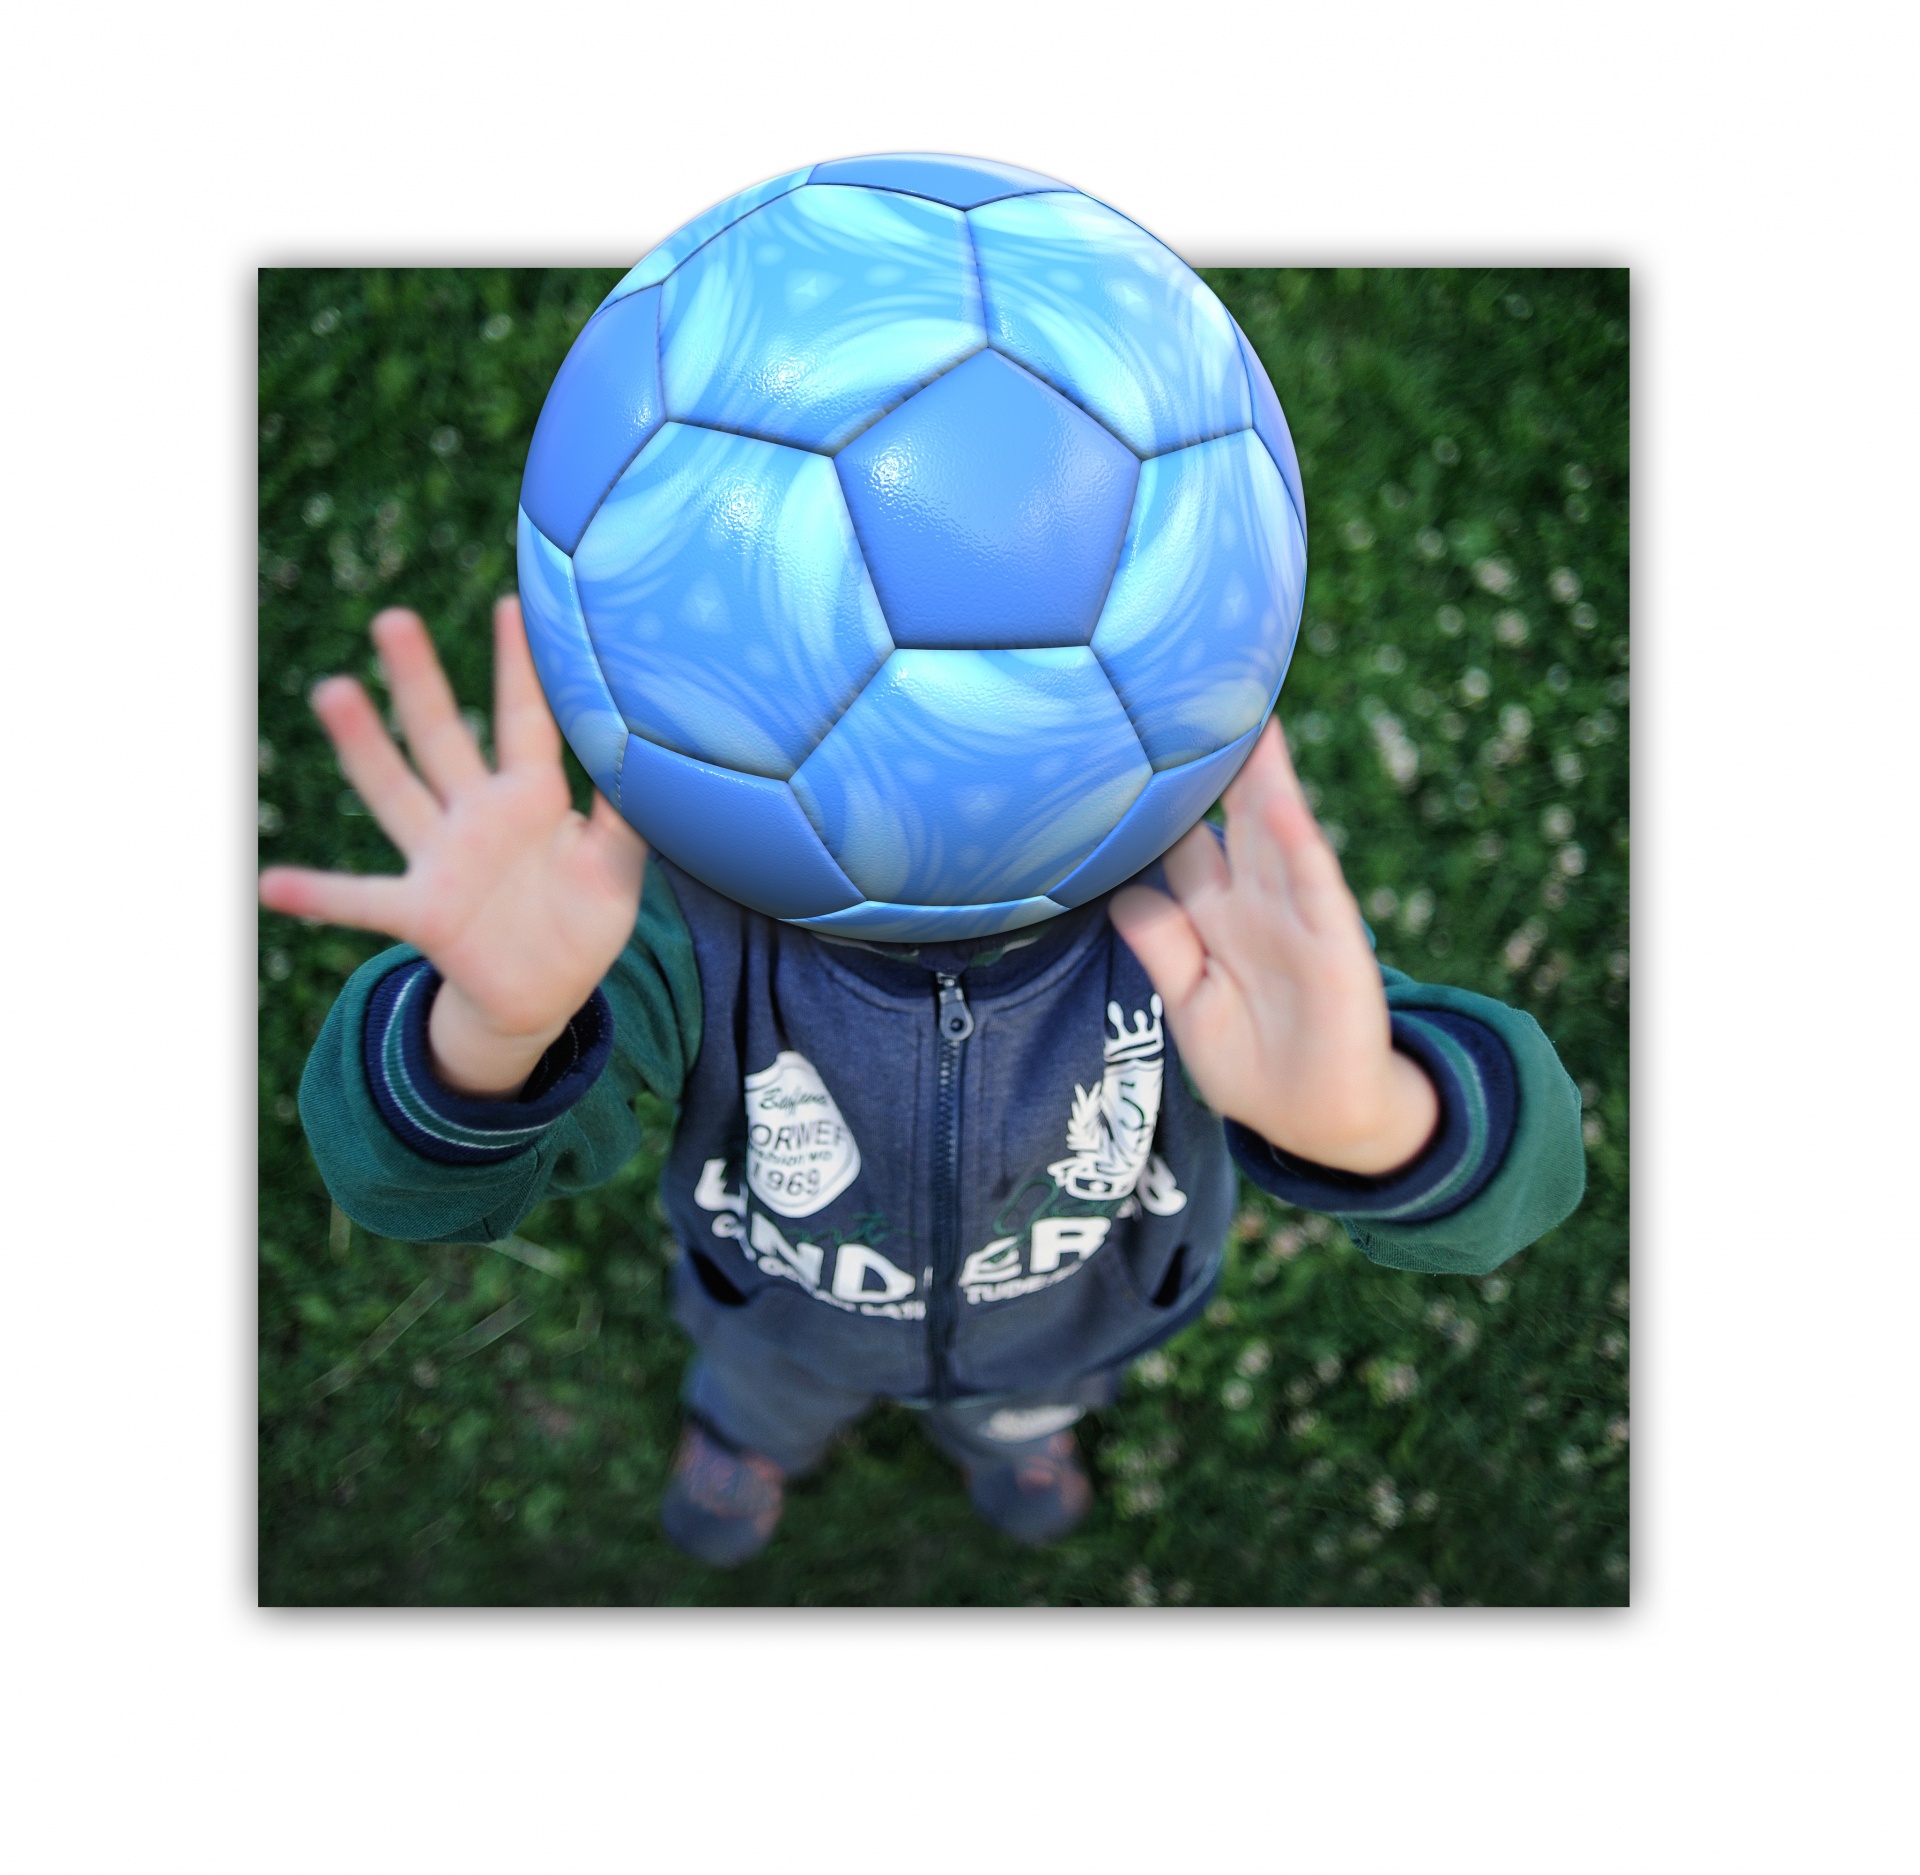 Junge werfende Fußball-Kugel